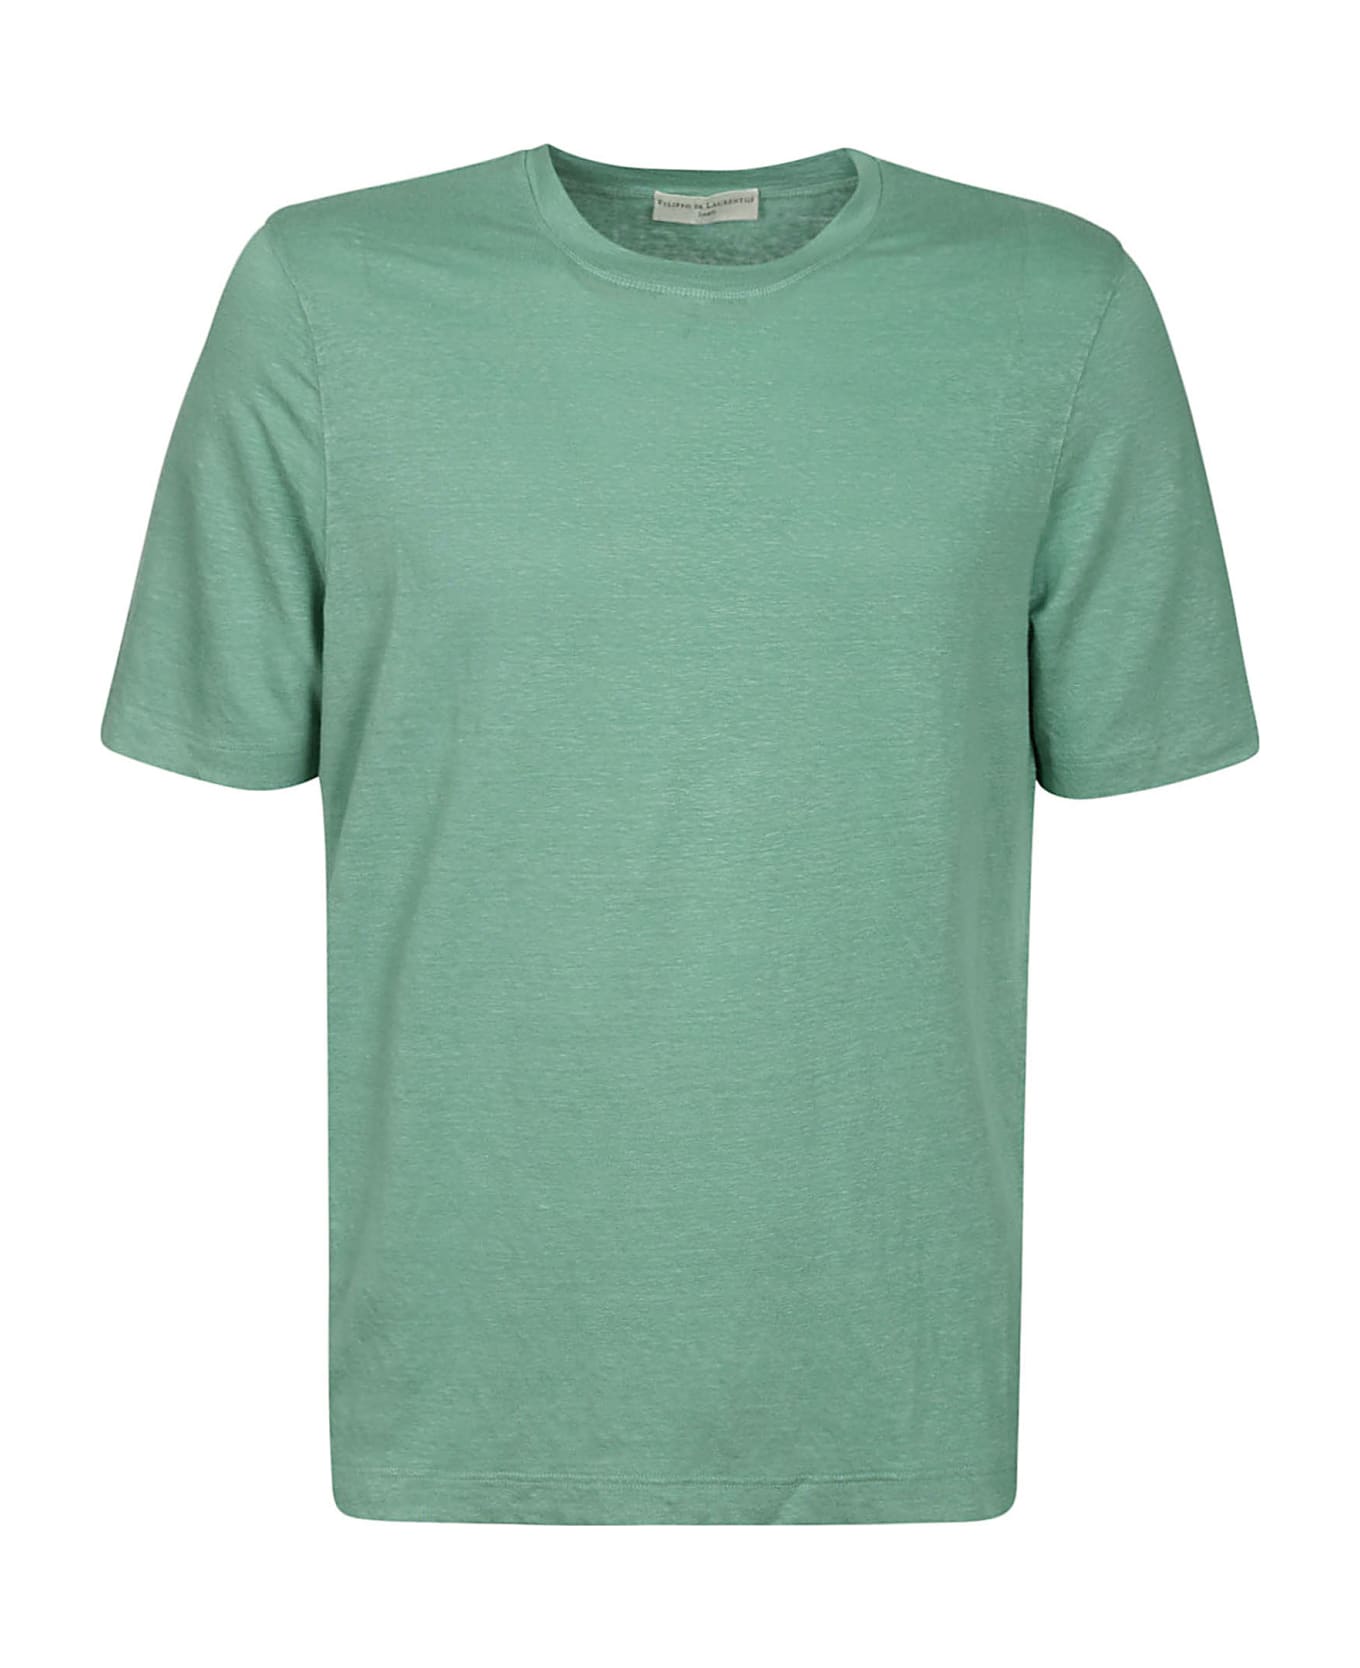 Filippo De Laurentiis Tshirt Ss - Emerald シャツ